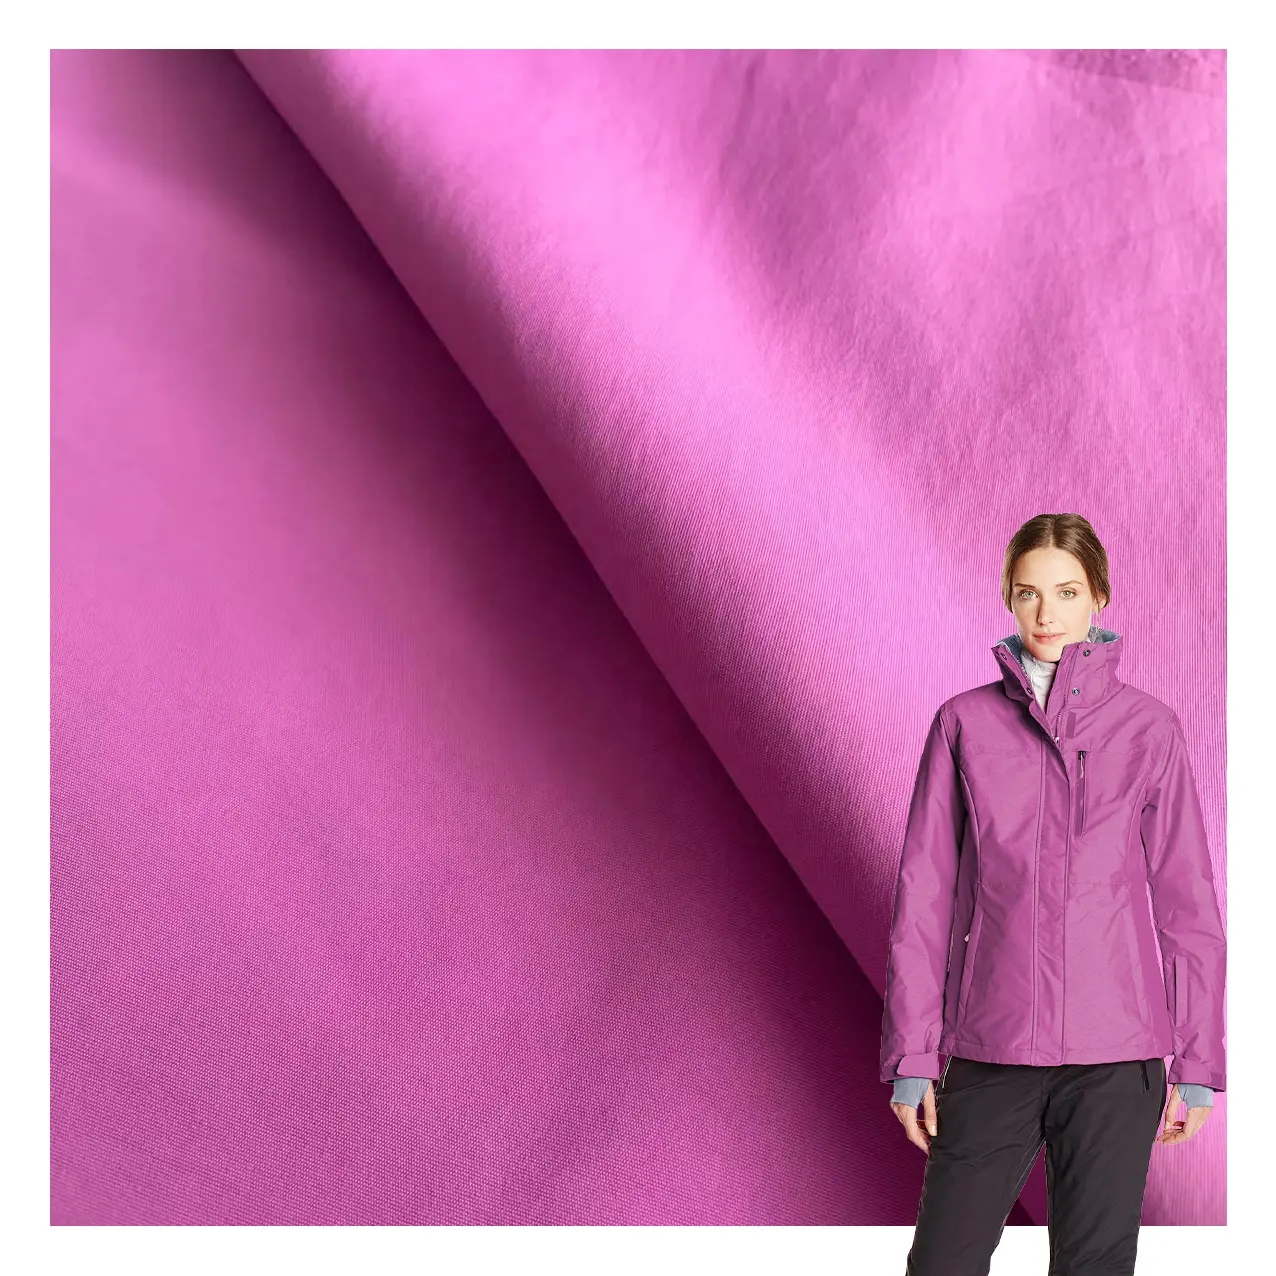 Taslan in Nylon 100% Taslon tessuto 70D * 160D Anti-Pilling impermeabile per giacca tuta da arrampicata